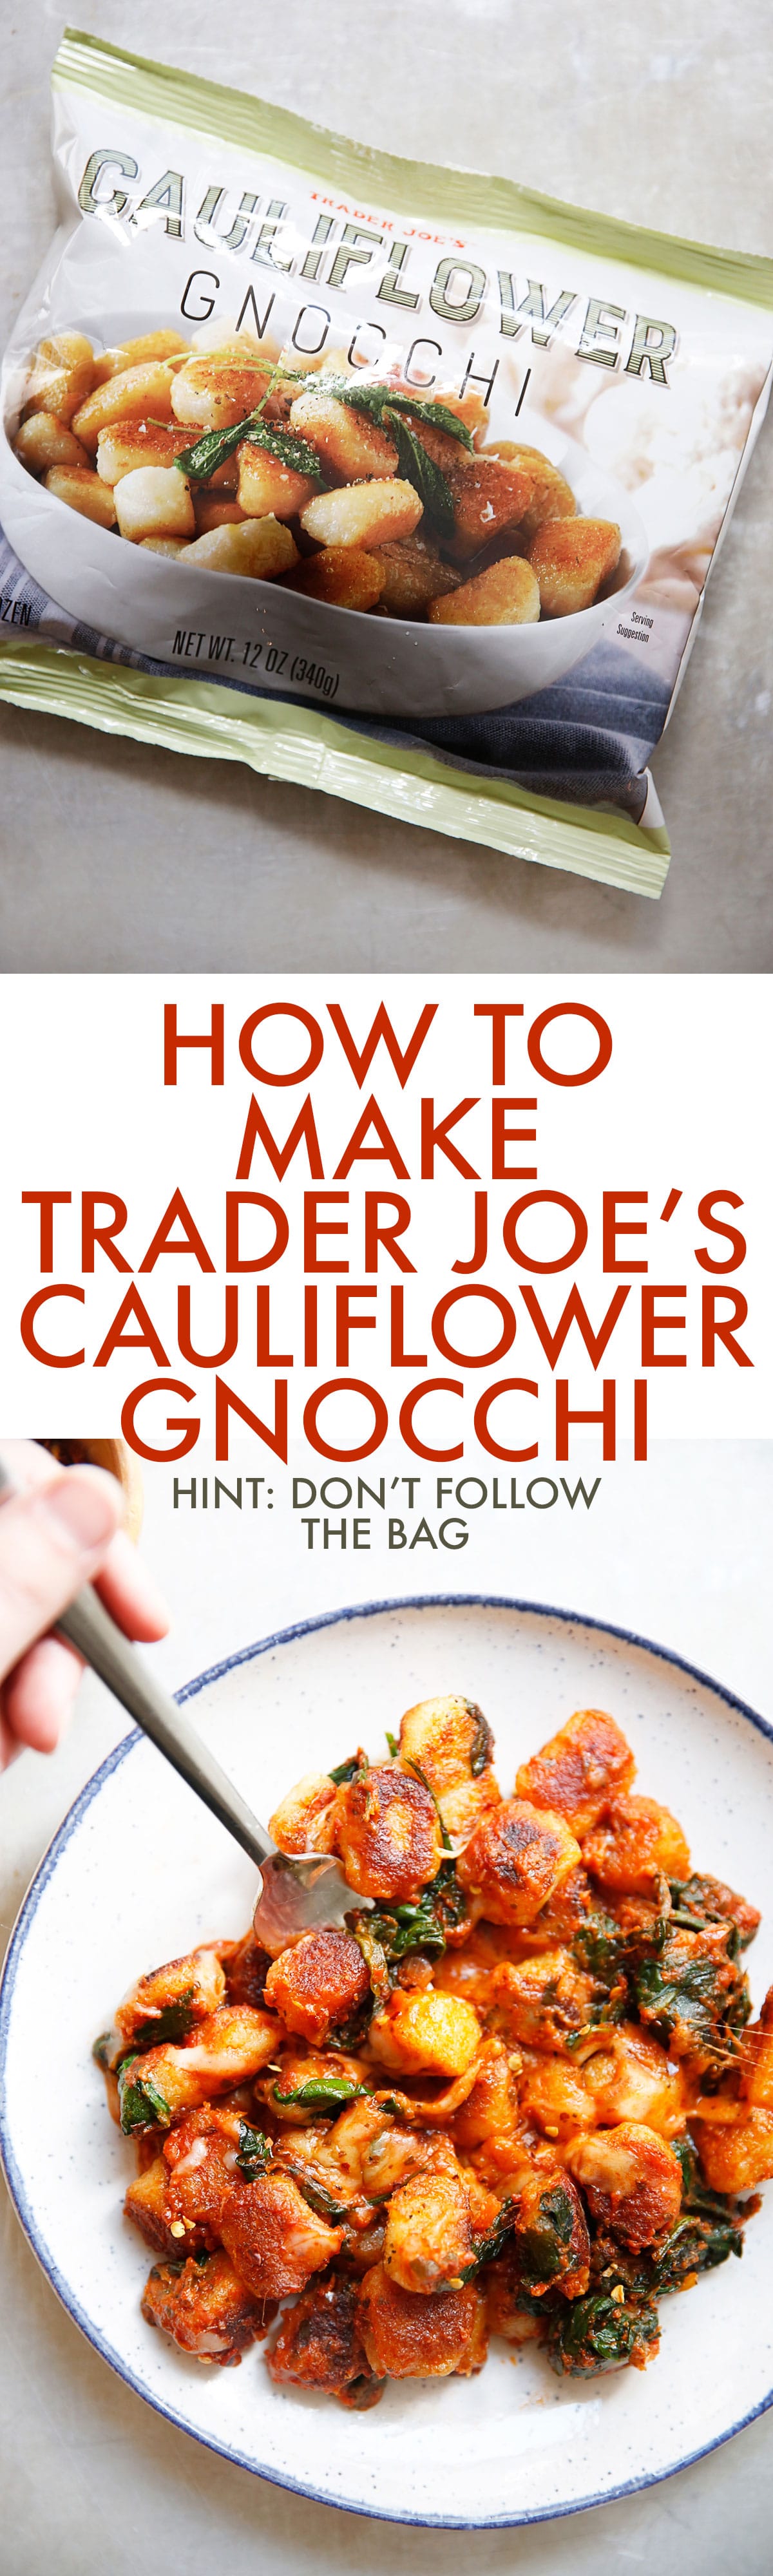 How to Make Trader Joe's Cauliflower Gnocchi